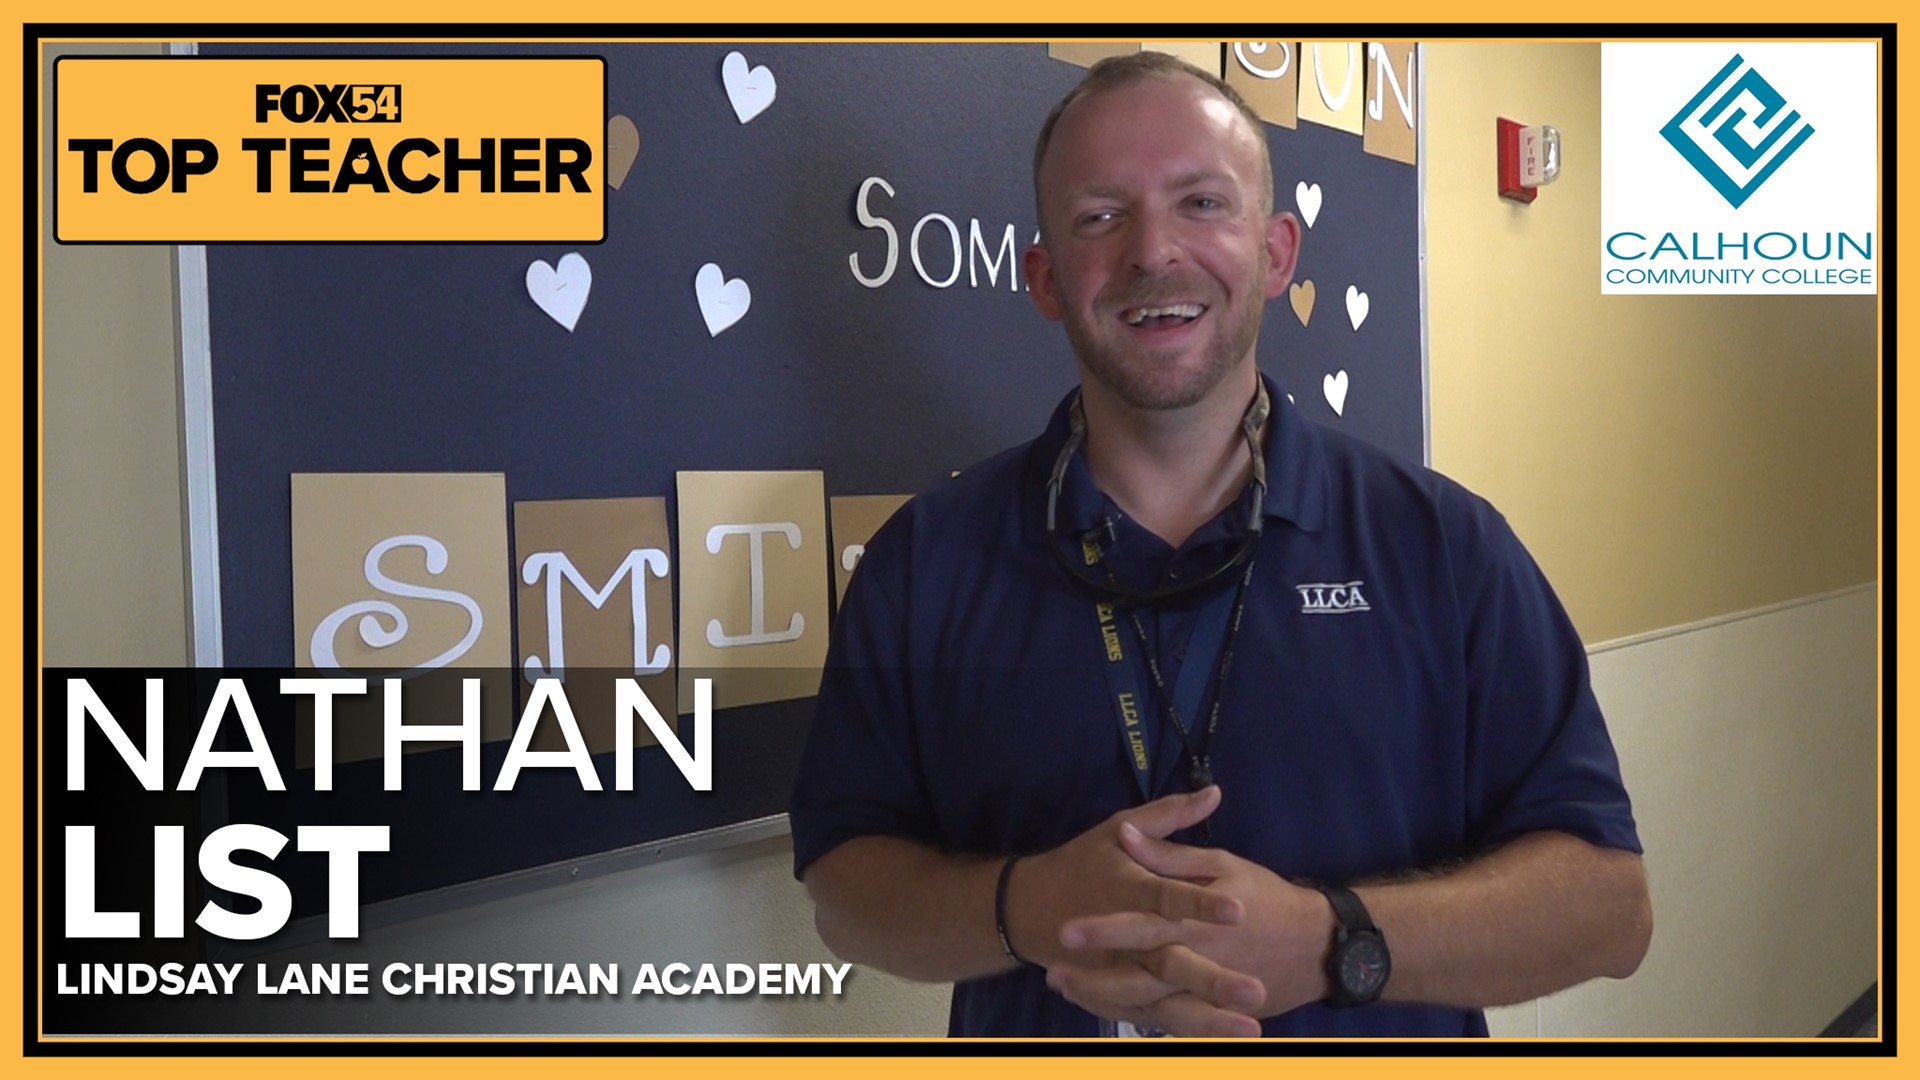 Top Teacher: Nathan List at Lindsay Lane Christian Academy